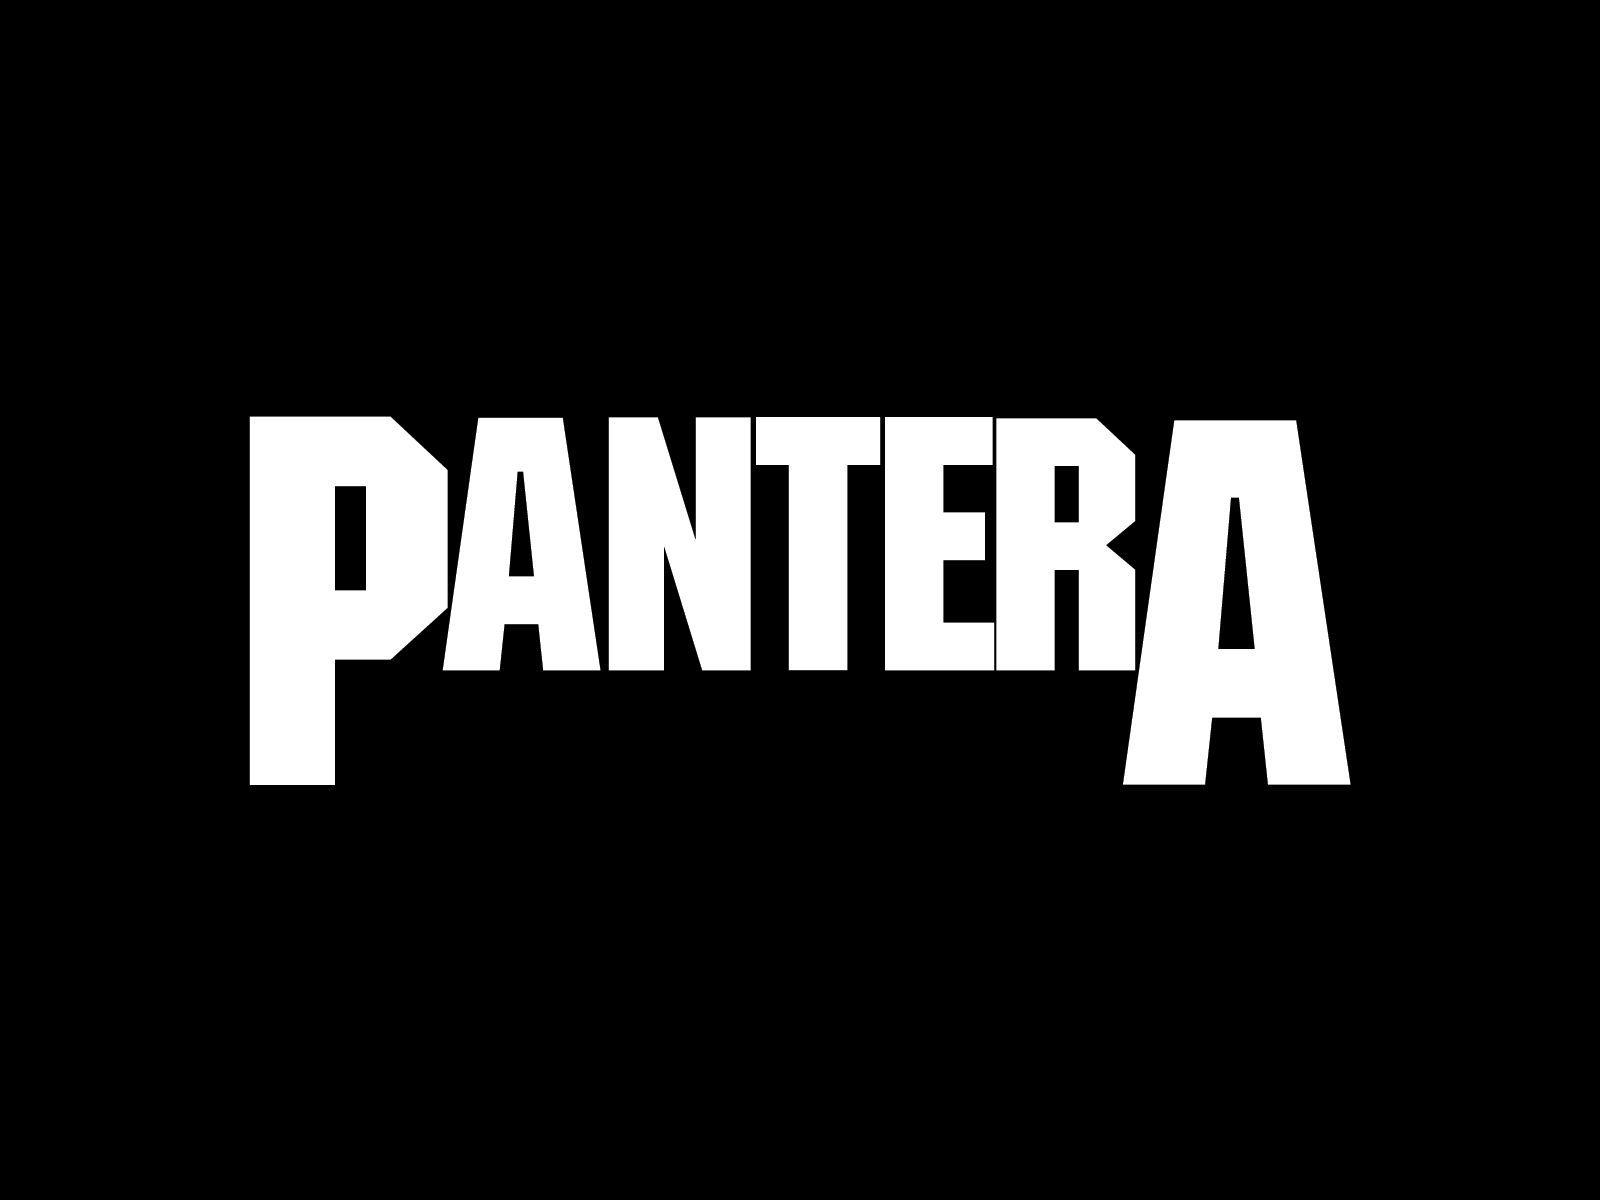 Pantera Logo wallpaper. Metal band logos, Metal bands and 80s metal